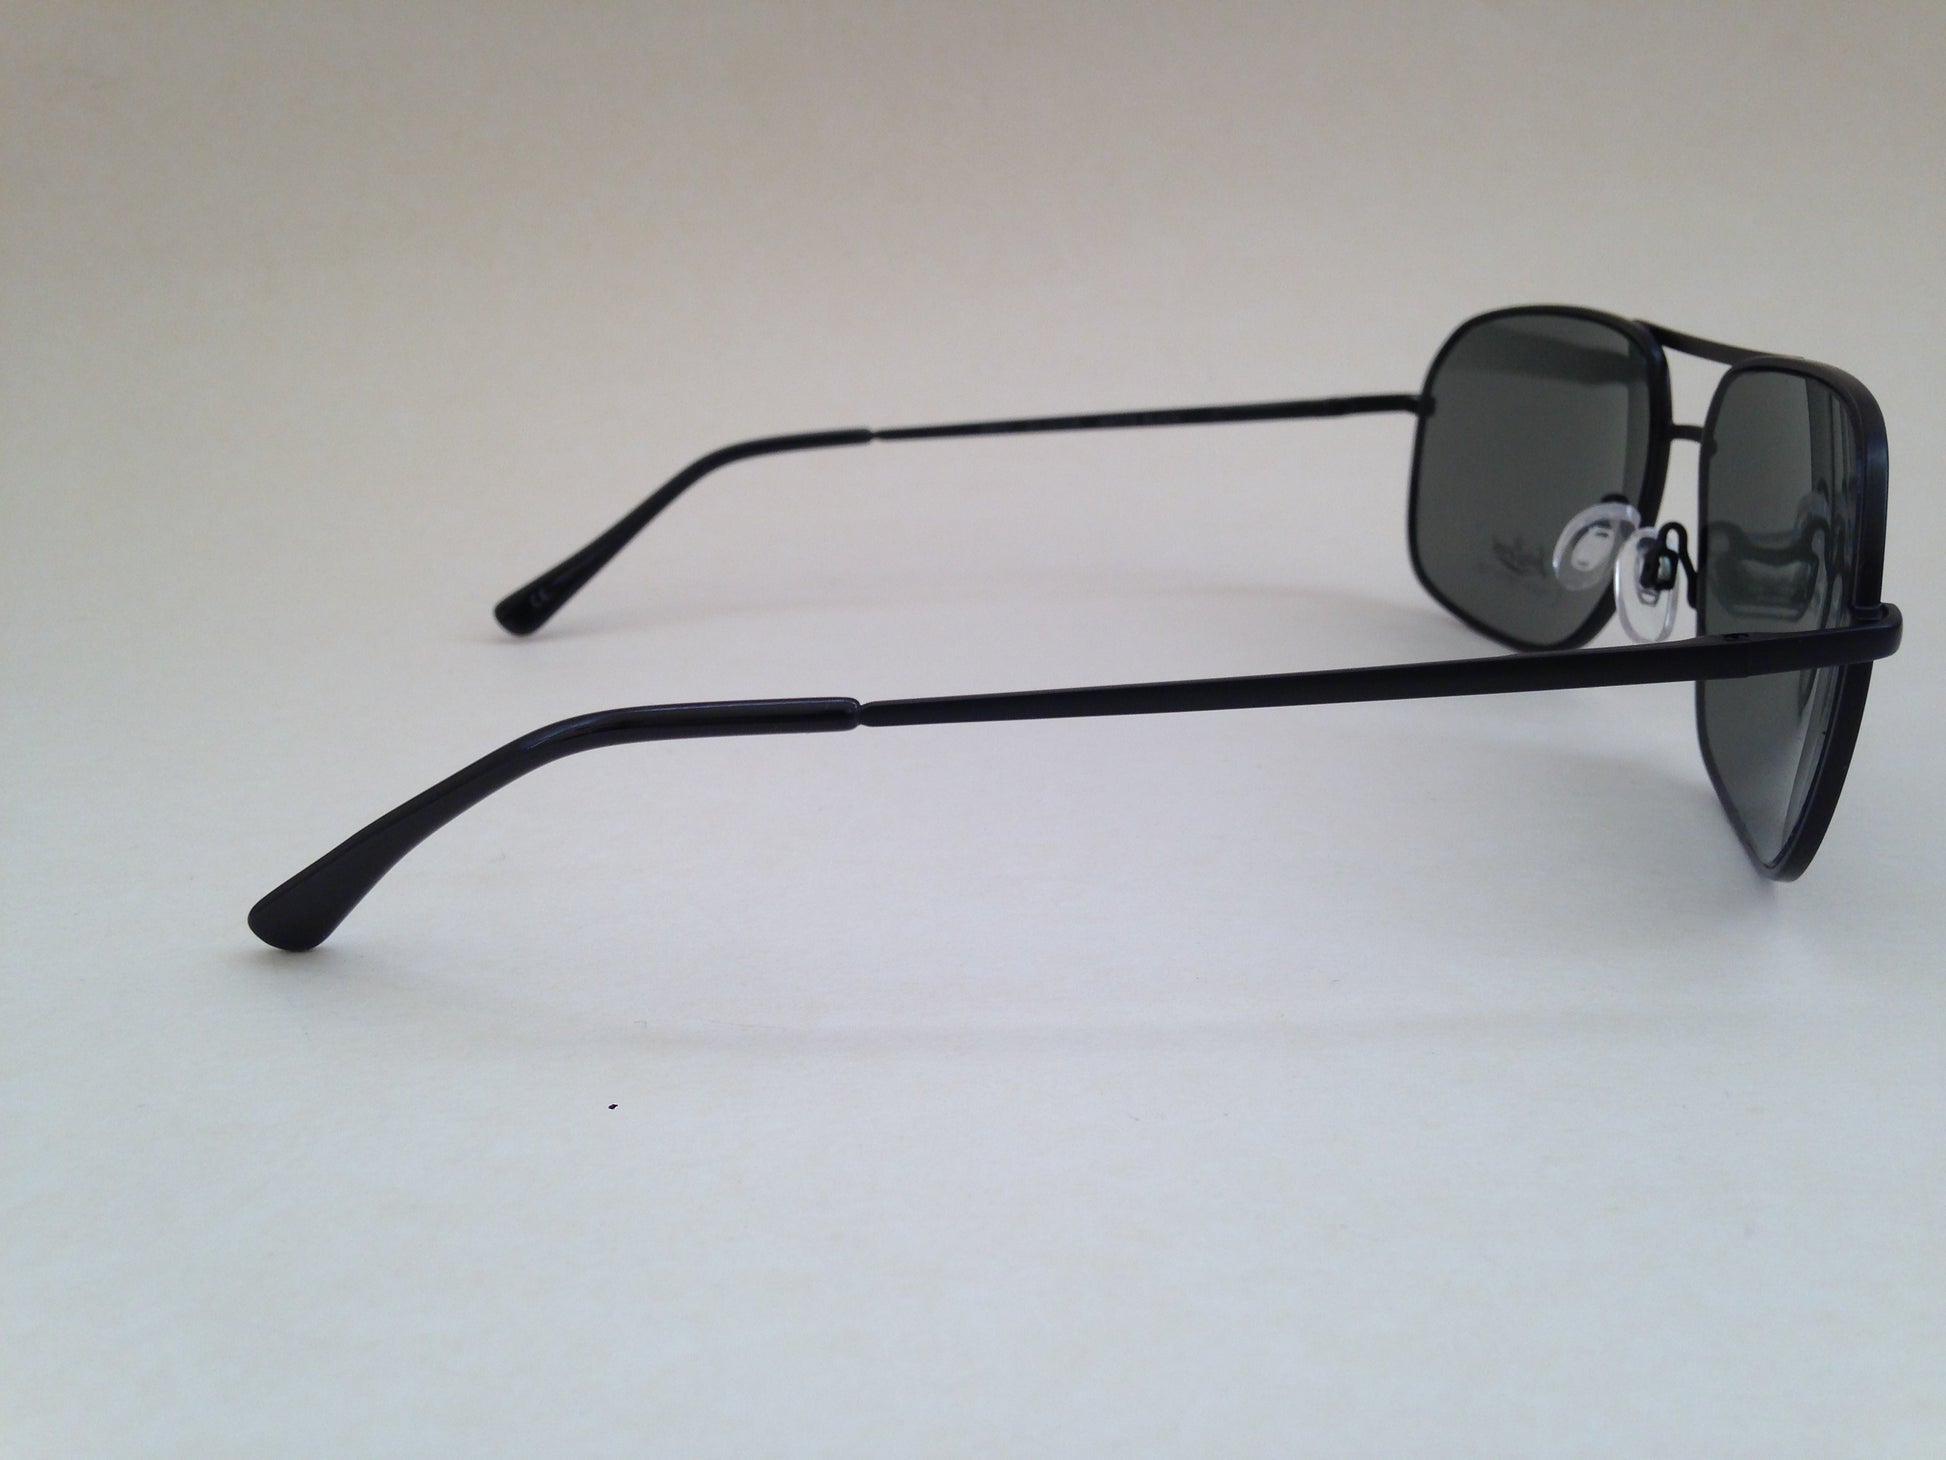 Lucky Brand Mens Aviator Sunglasses Matte Black Rectangular New Authentic D910 - Sunglasses